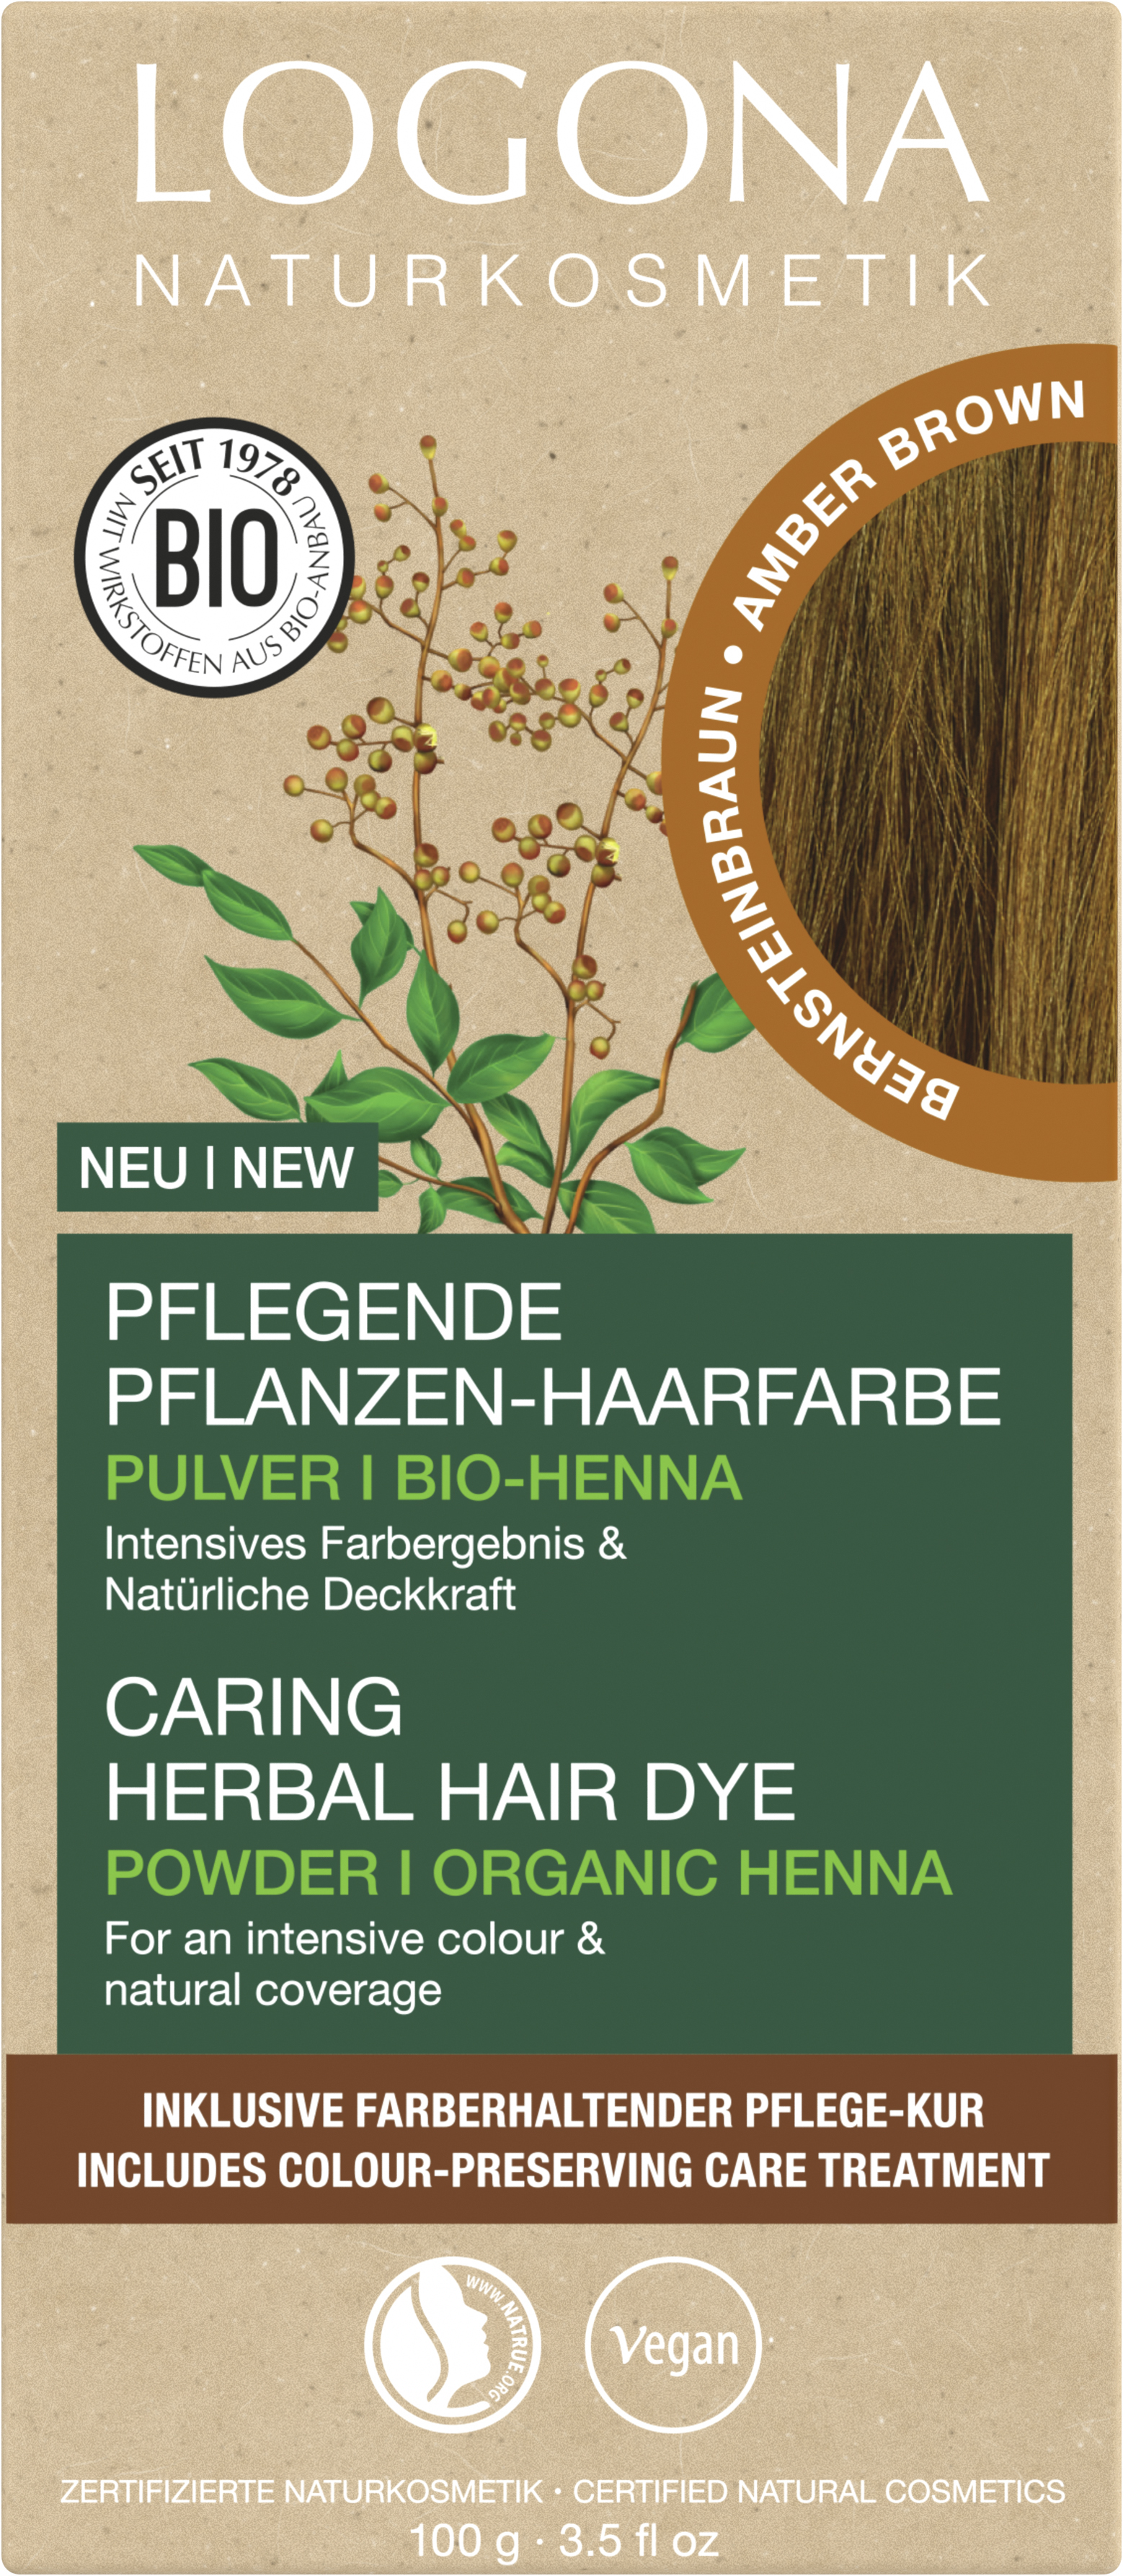 Colour nut LOGONA | Hair Cosmetics 060 brown Powder Natural Herbal